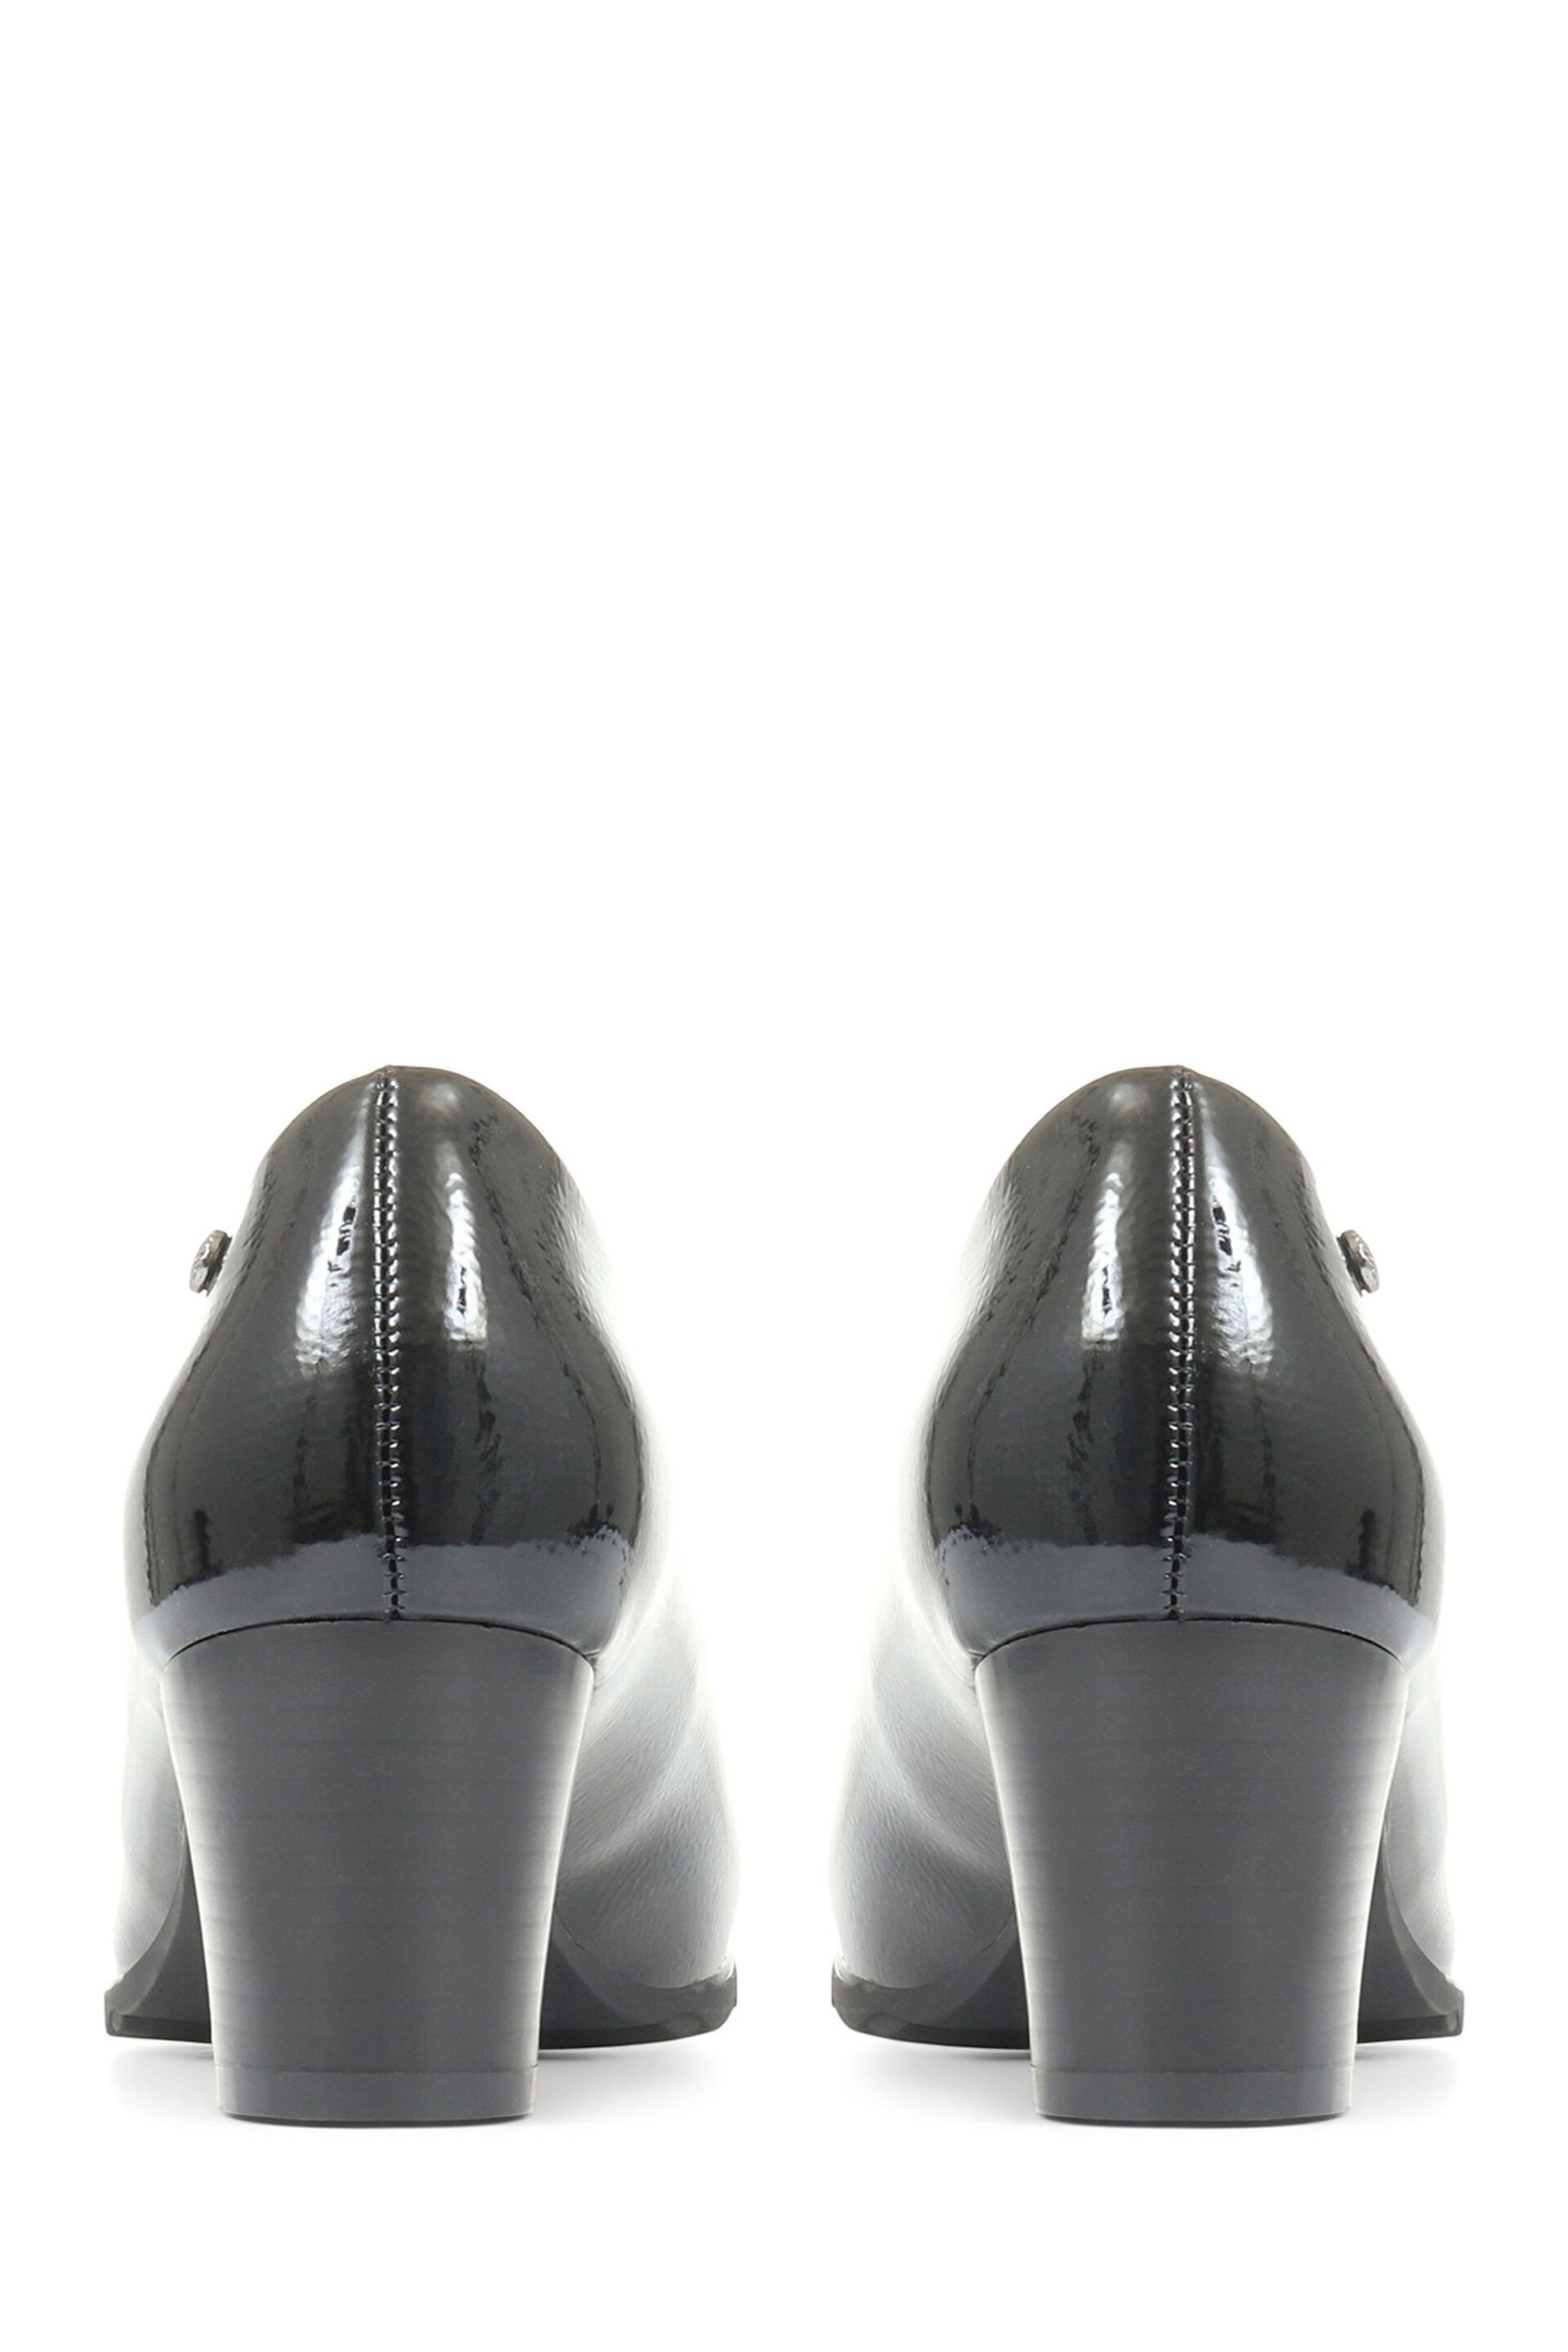 Pavers Block Heeled Black Court Shoes - Image 3 of 5